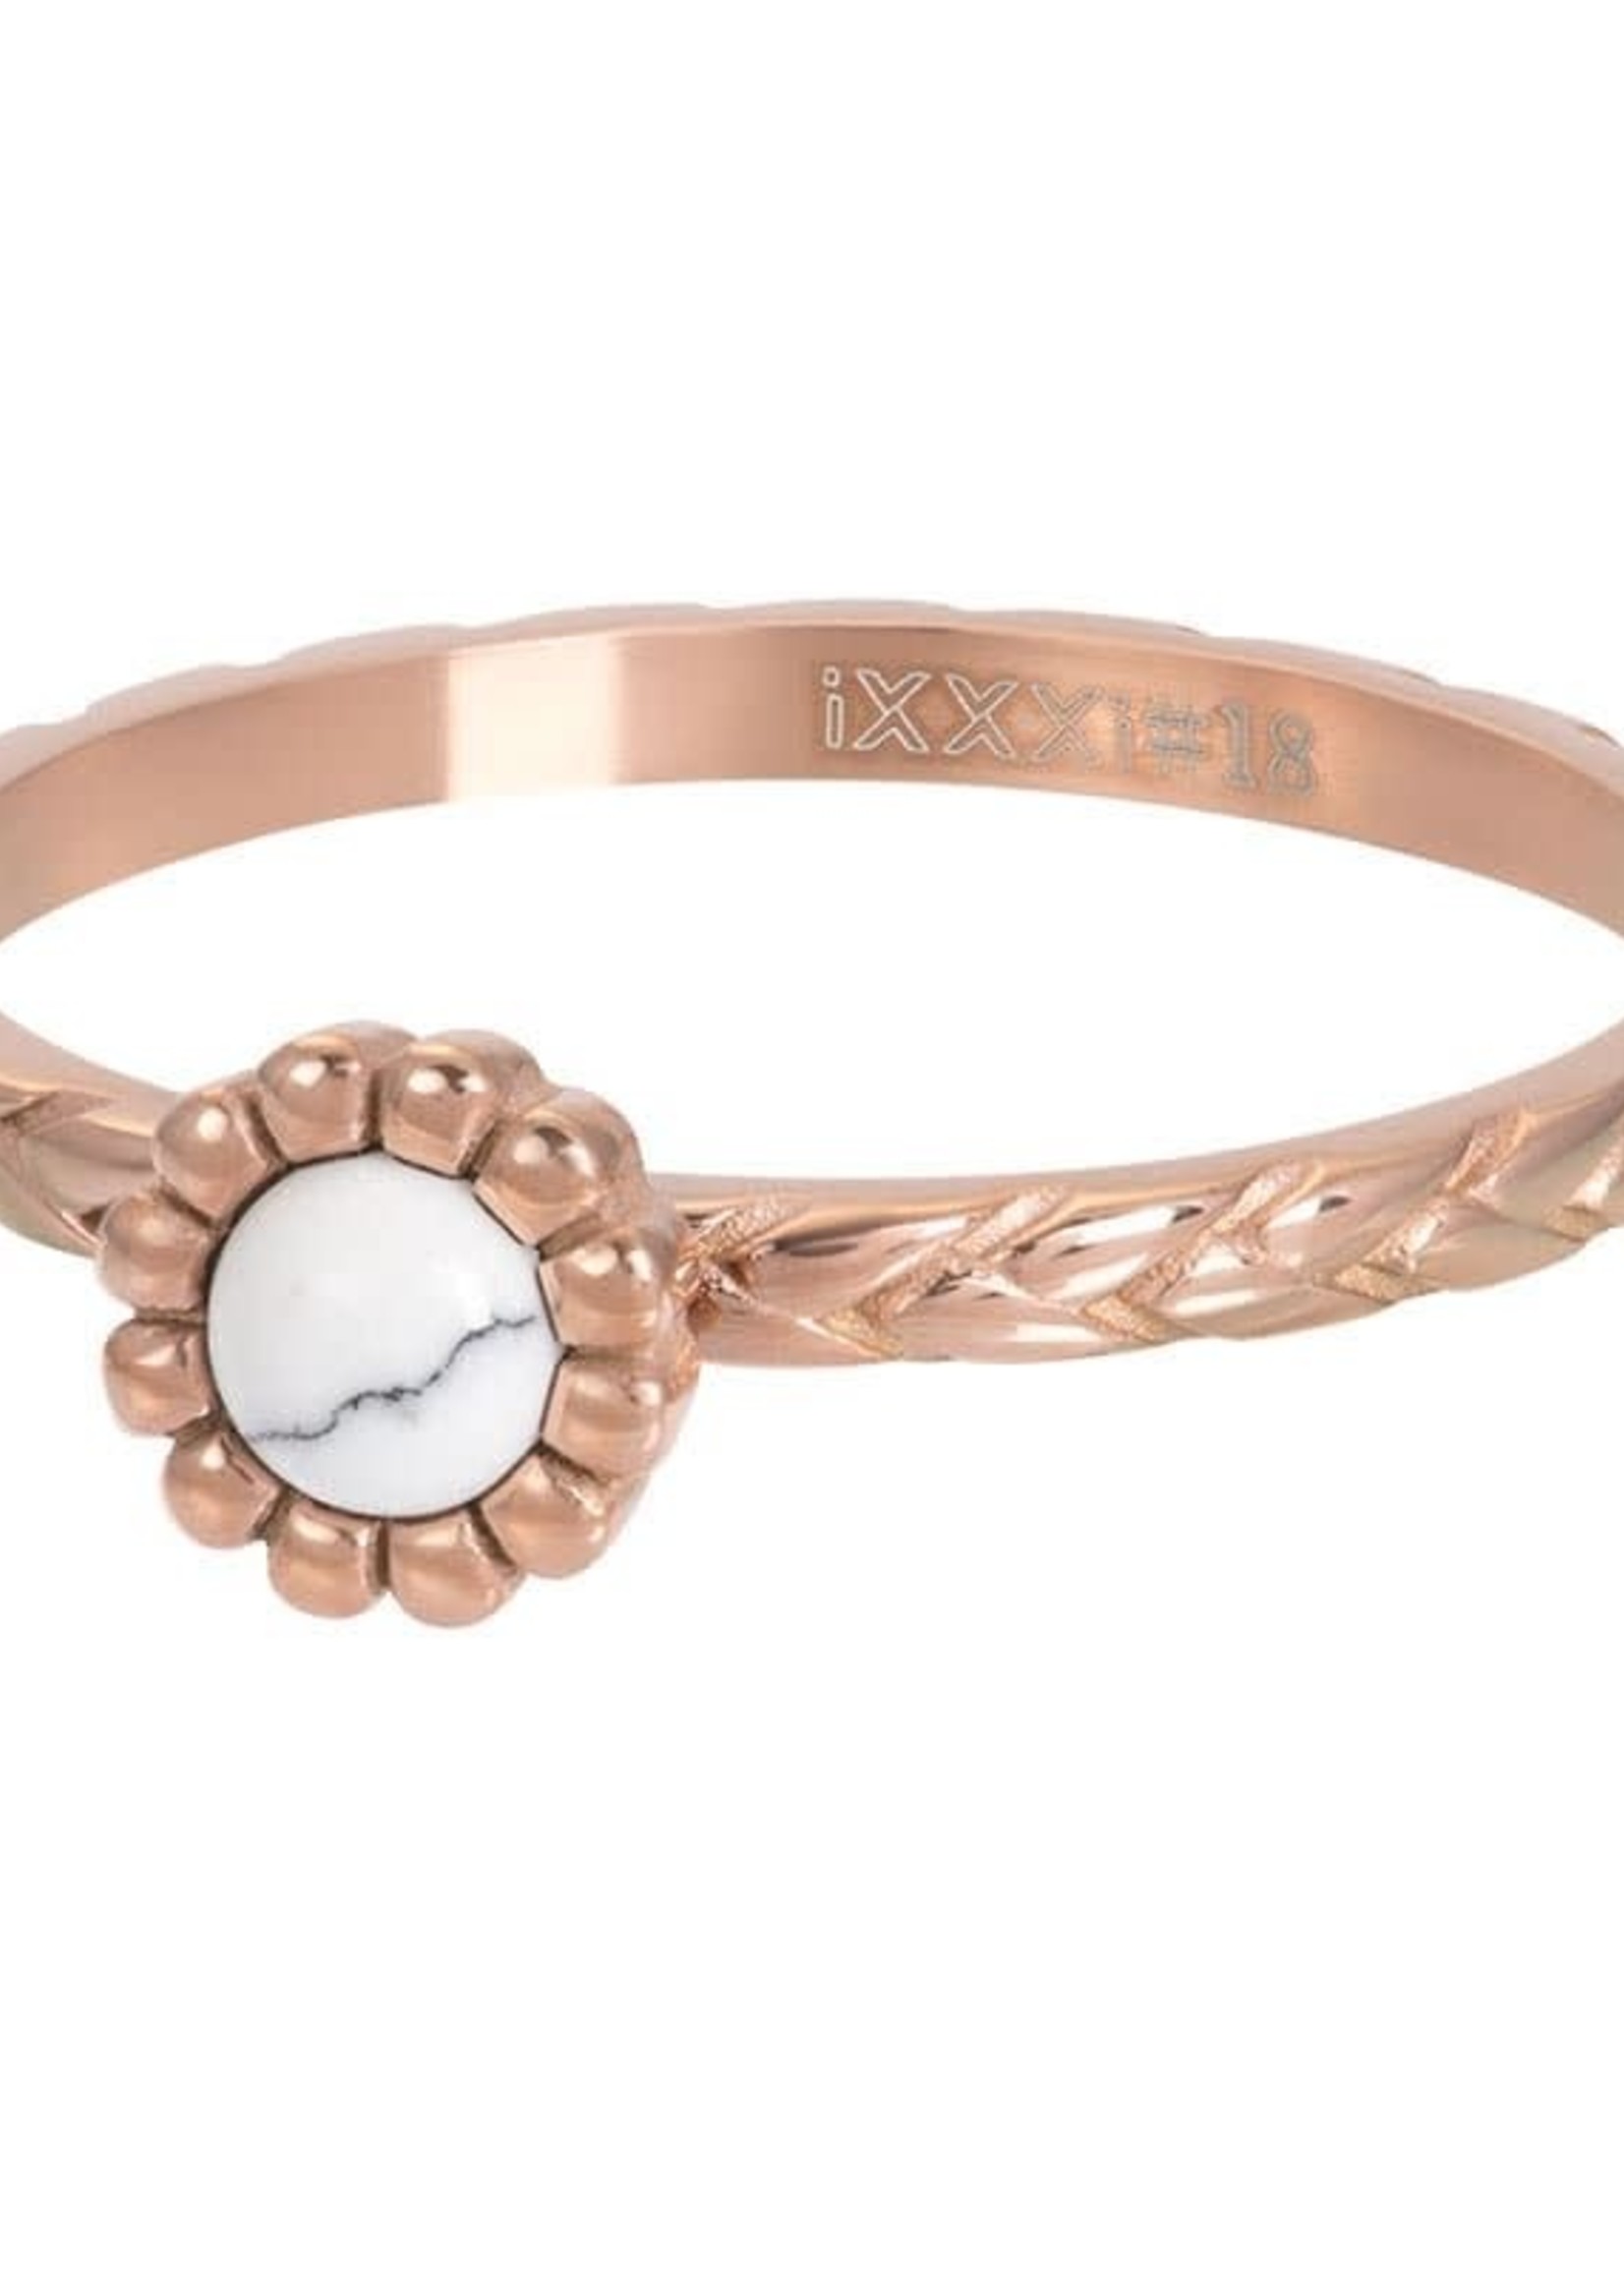 iXXXi Jewelry iXXXi vulring inspired white - rose